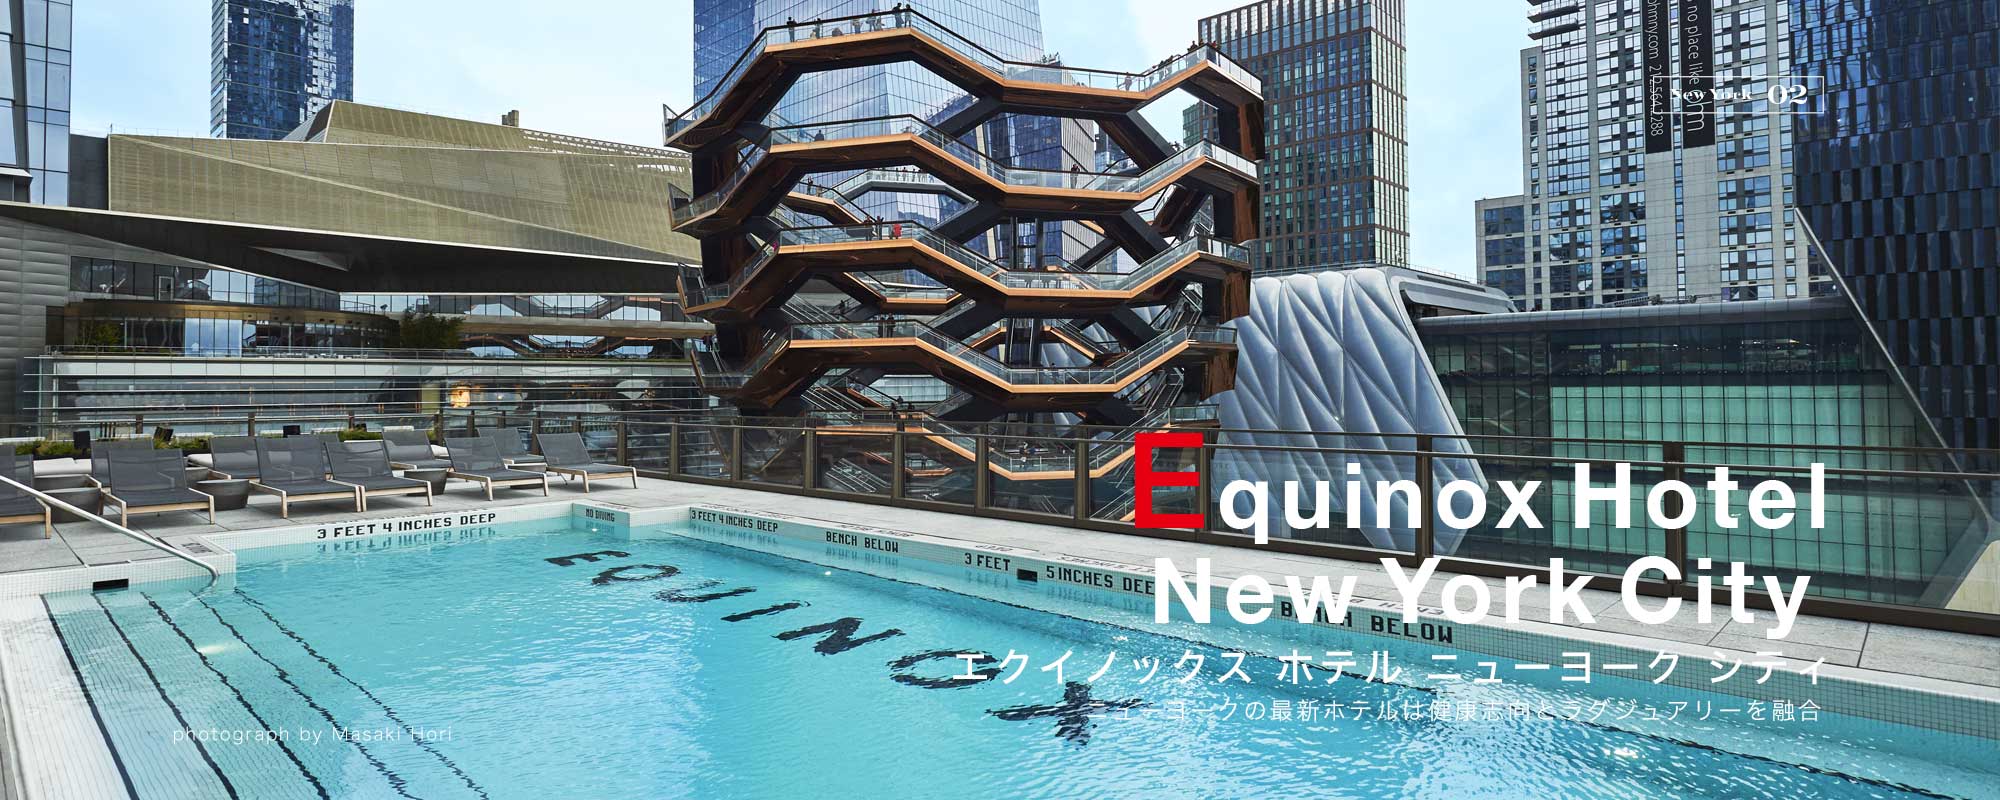 Equinox Hotel New York City - エクイノックス ホテル ニューヨーク シティ /  ニューヨークの最新ホテルは健康志向とラグジュアリーを融合